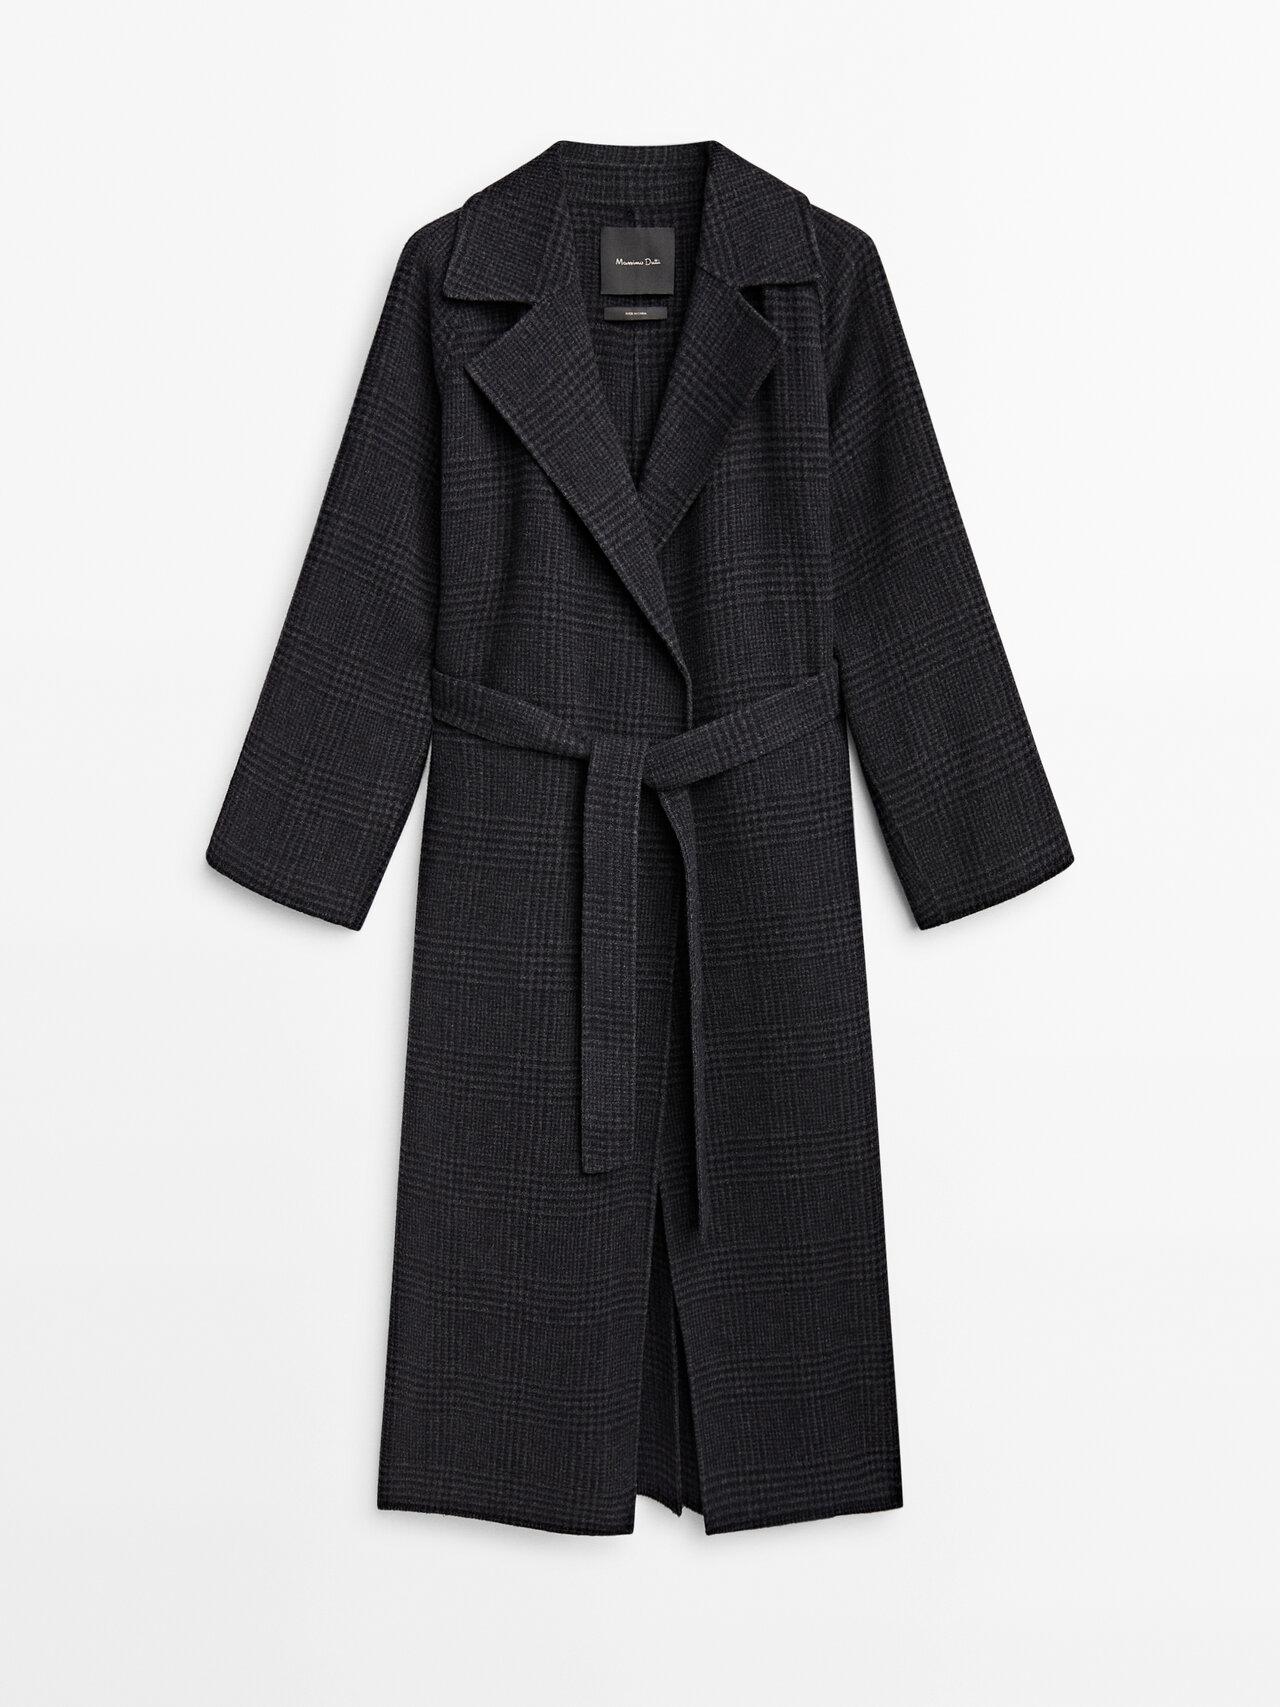 MASSIMO DUTTI Long Wool Blend Check Robe Coat in Black | Lyst